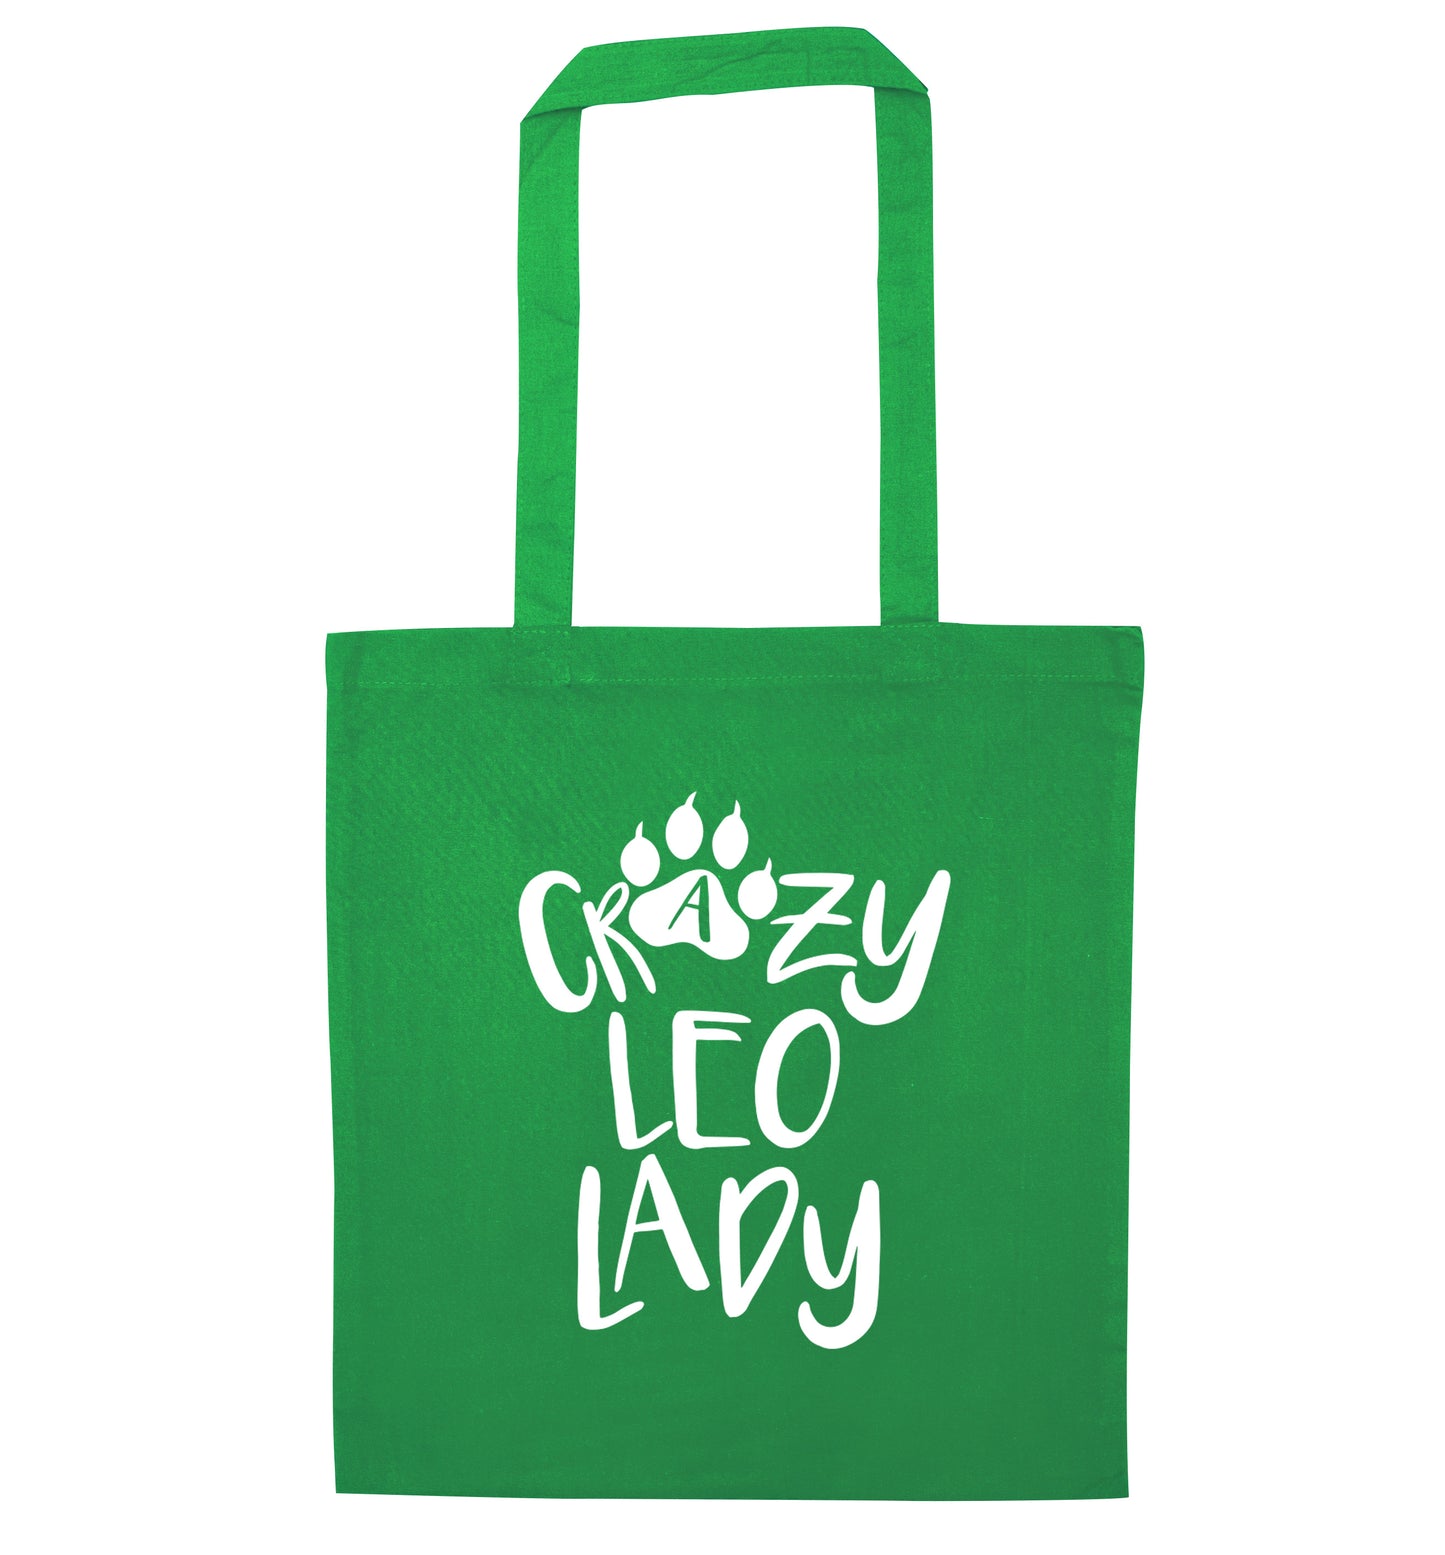 Crazy leo lady green tote bag